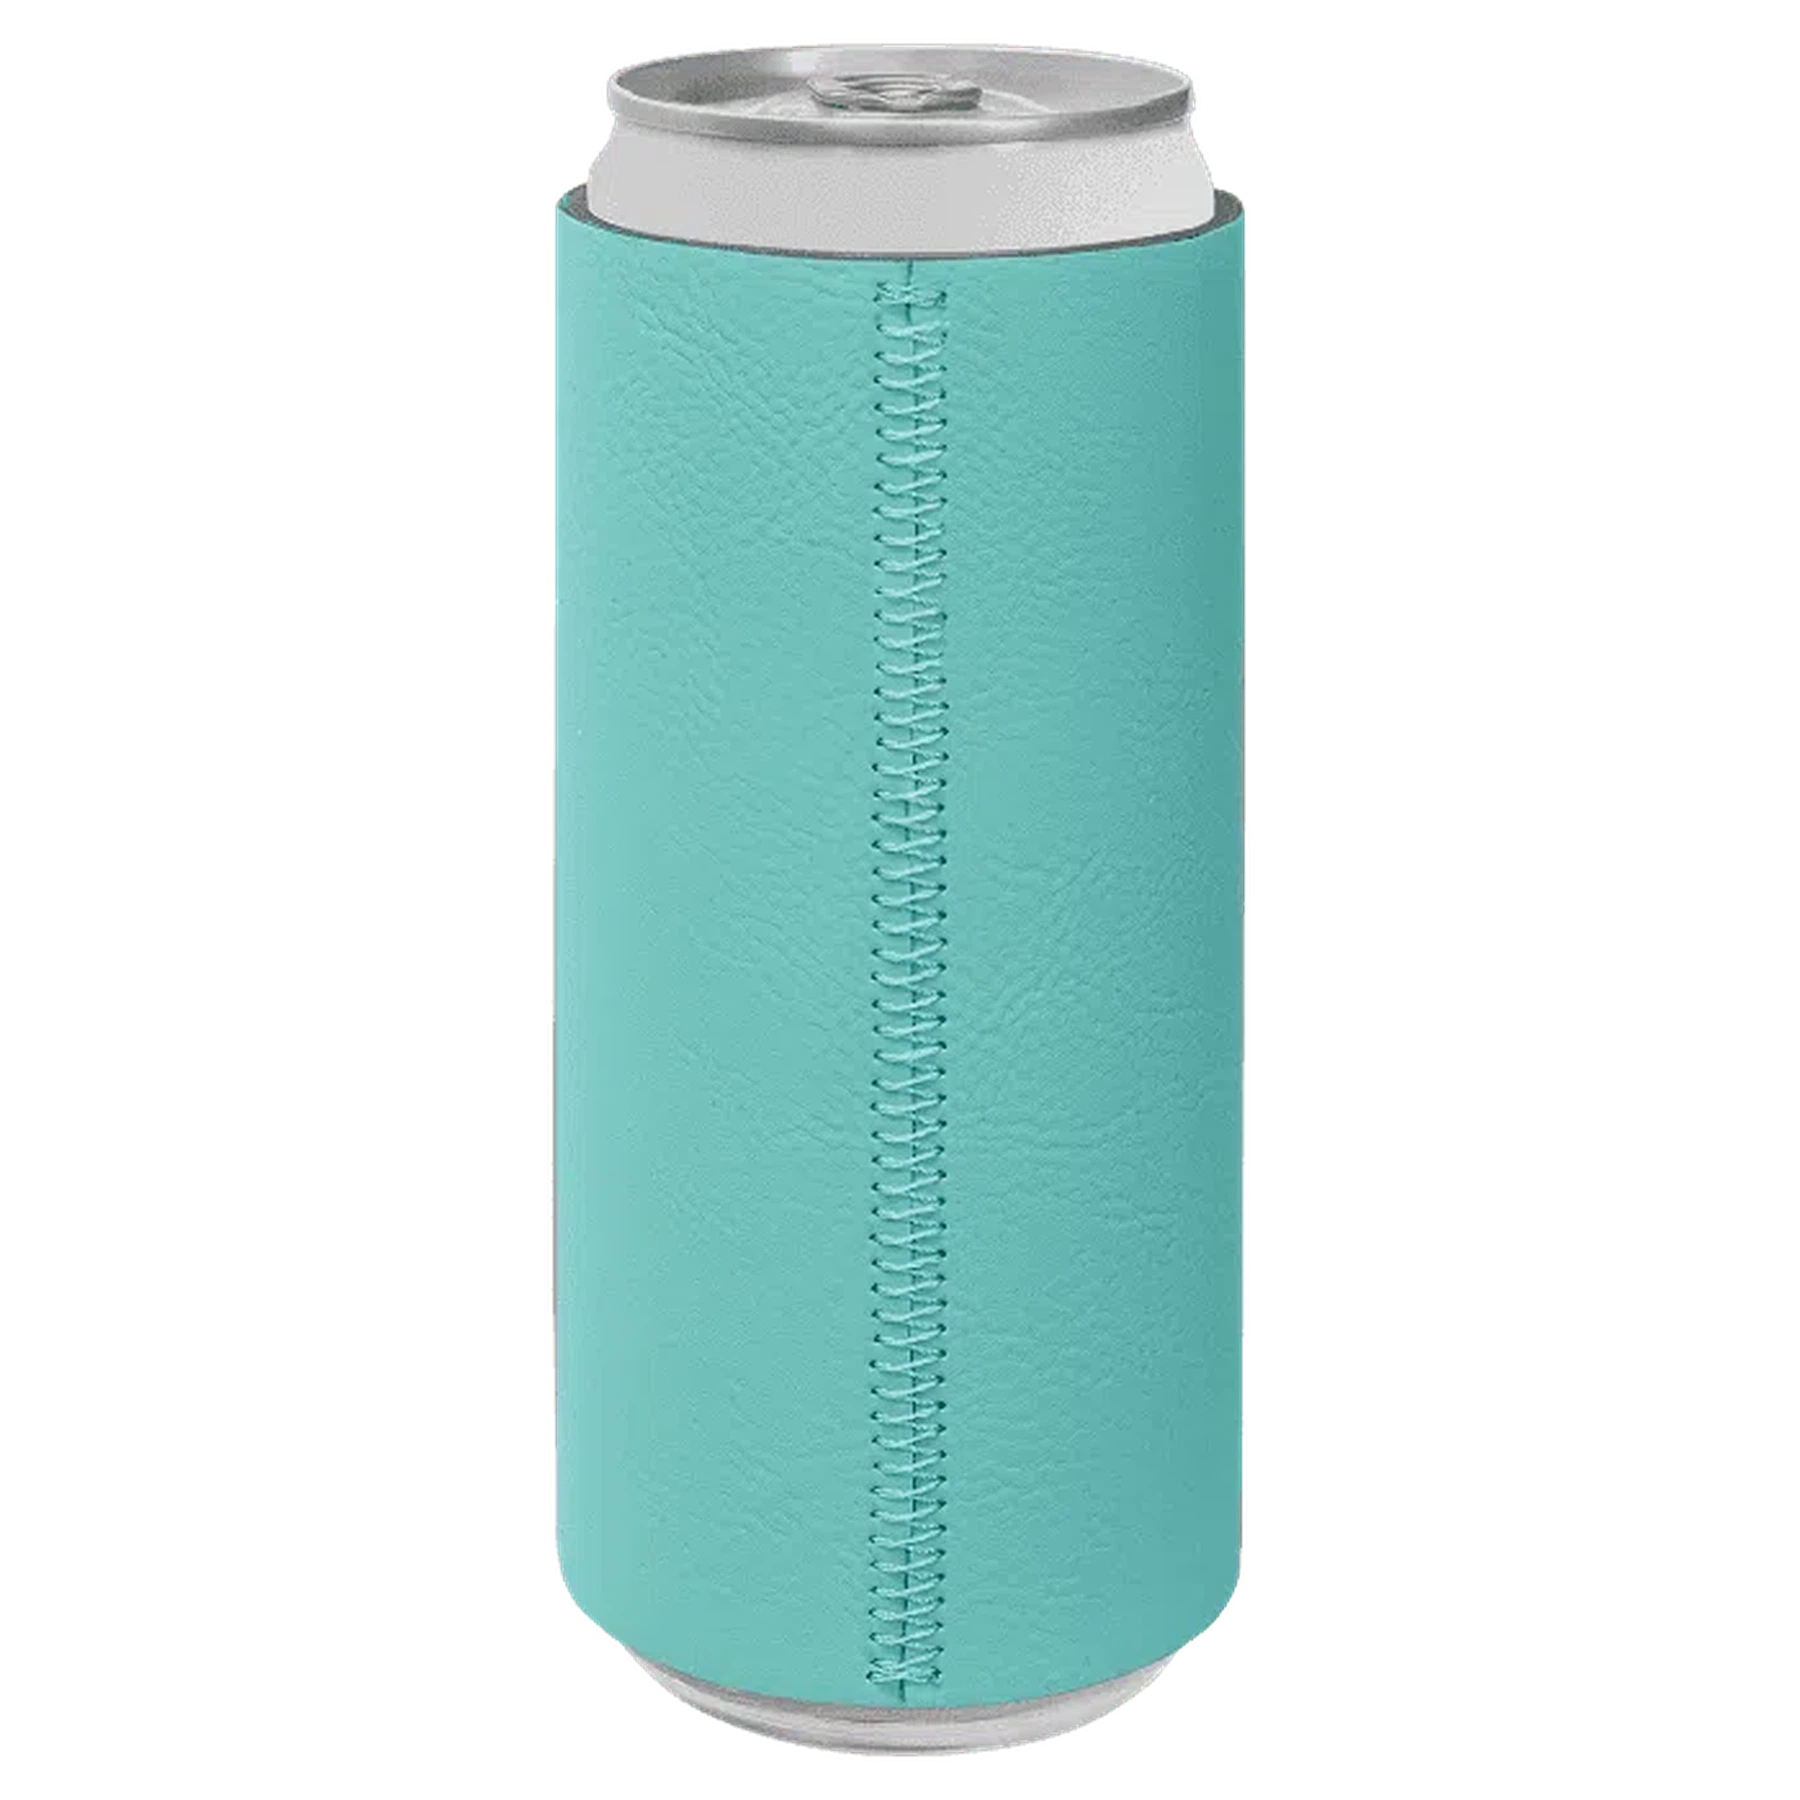 Slim Leatherette Beverage Holder (Various Colors)